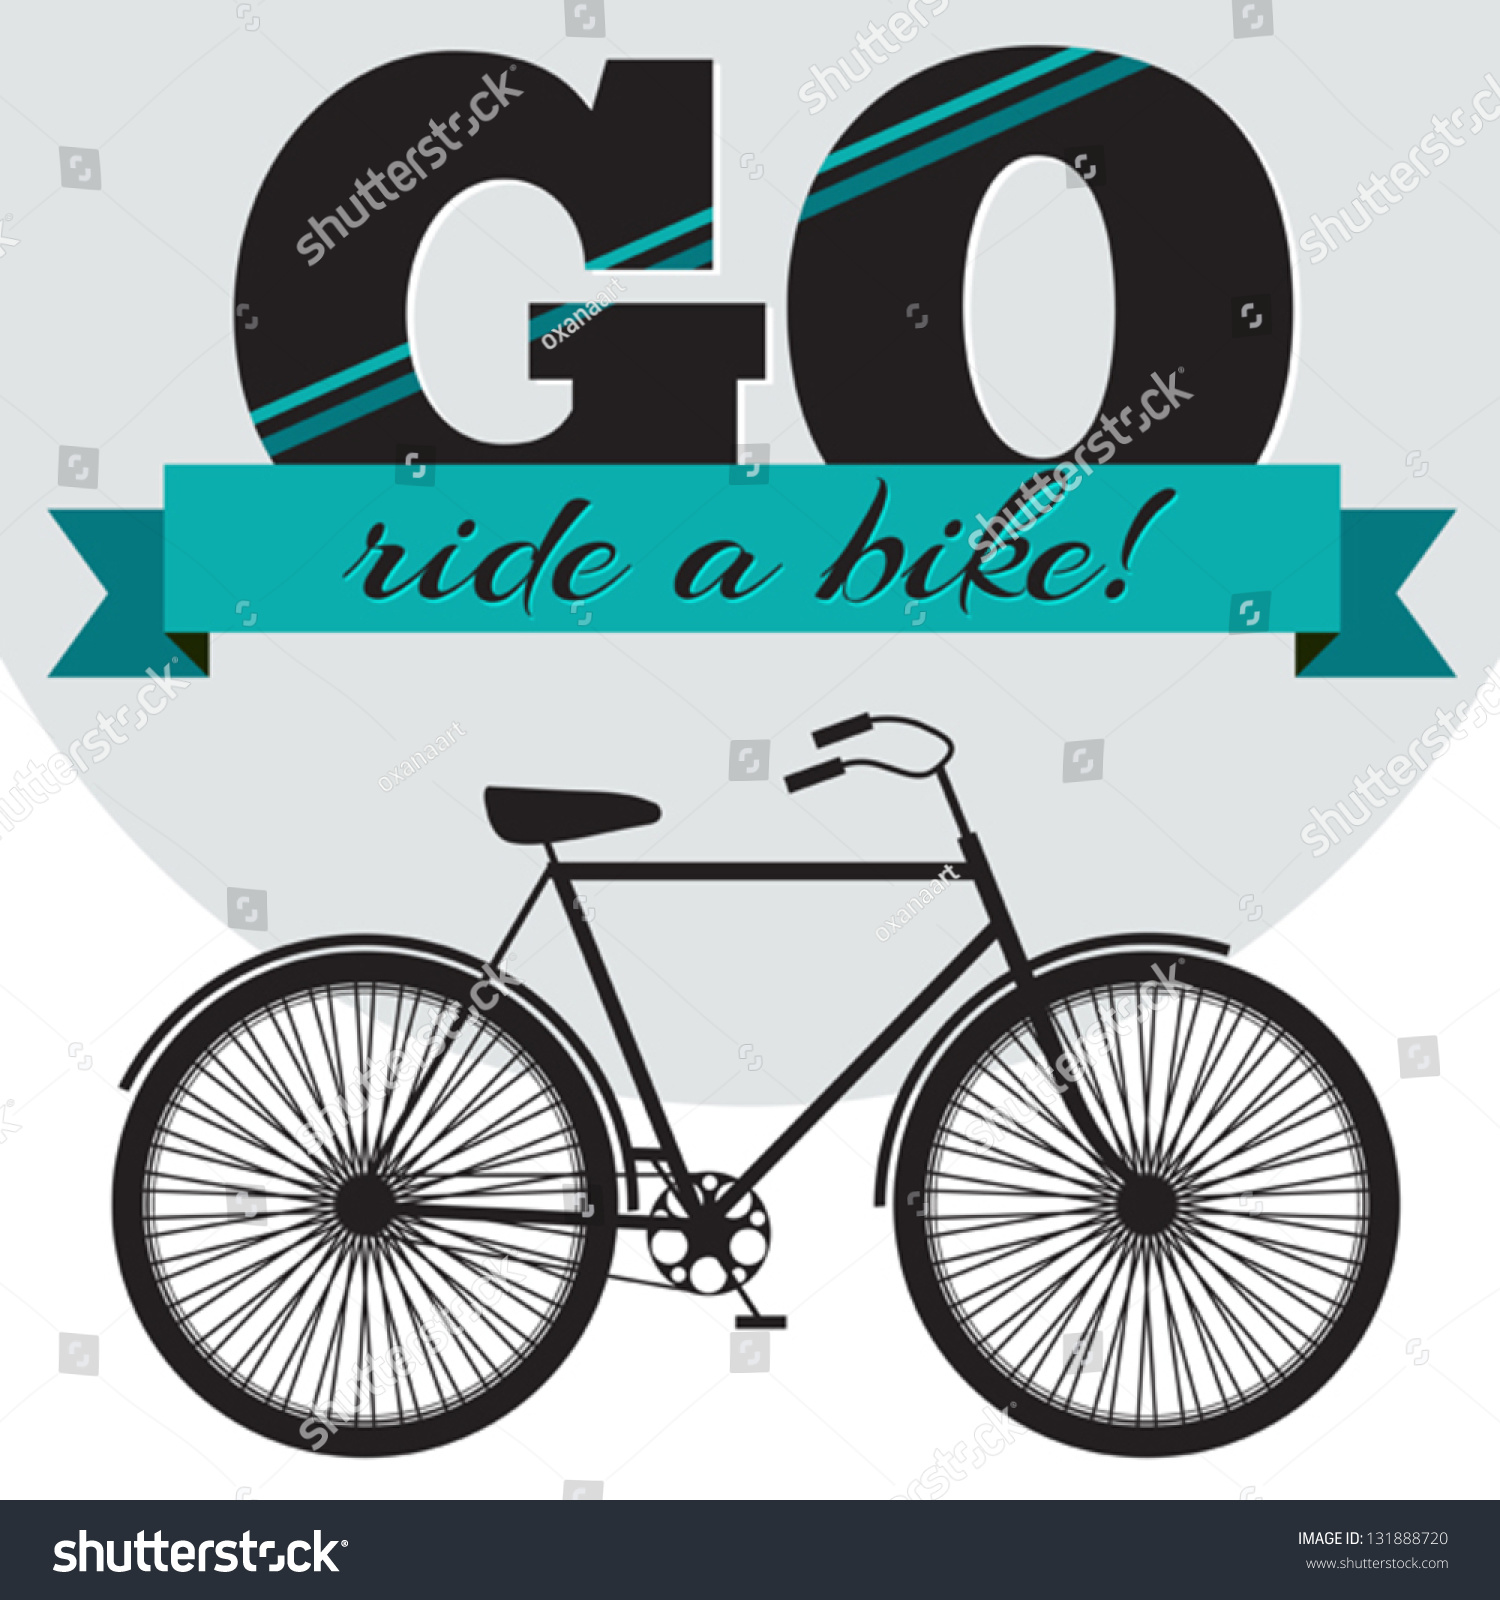 go ride bicycles